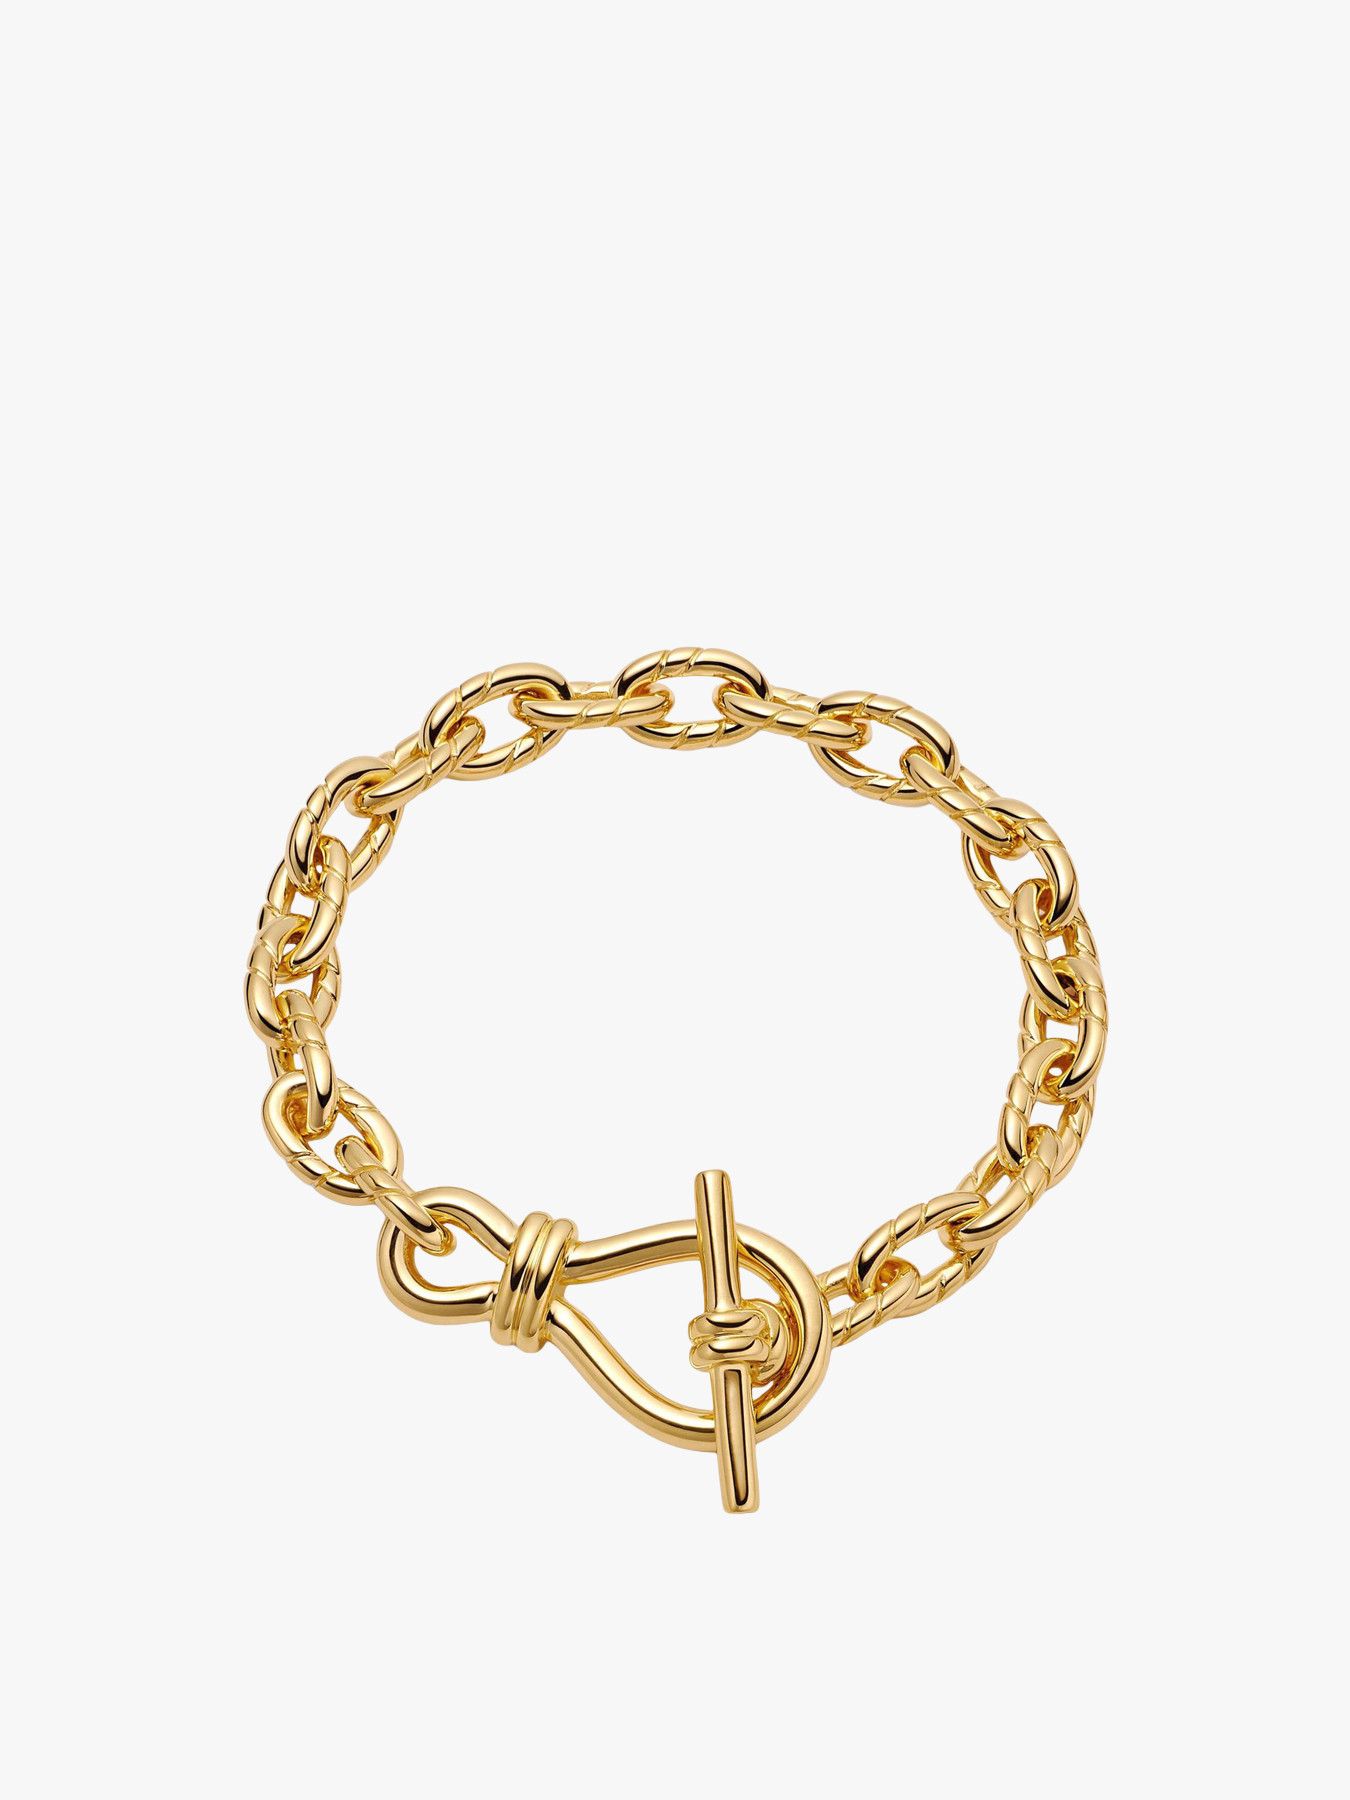 Women's Gold Bracelets: Best Prices, Buy Bracelet made of Gold for Ladies |  Online shop FJewellery